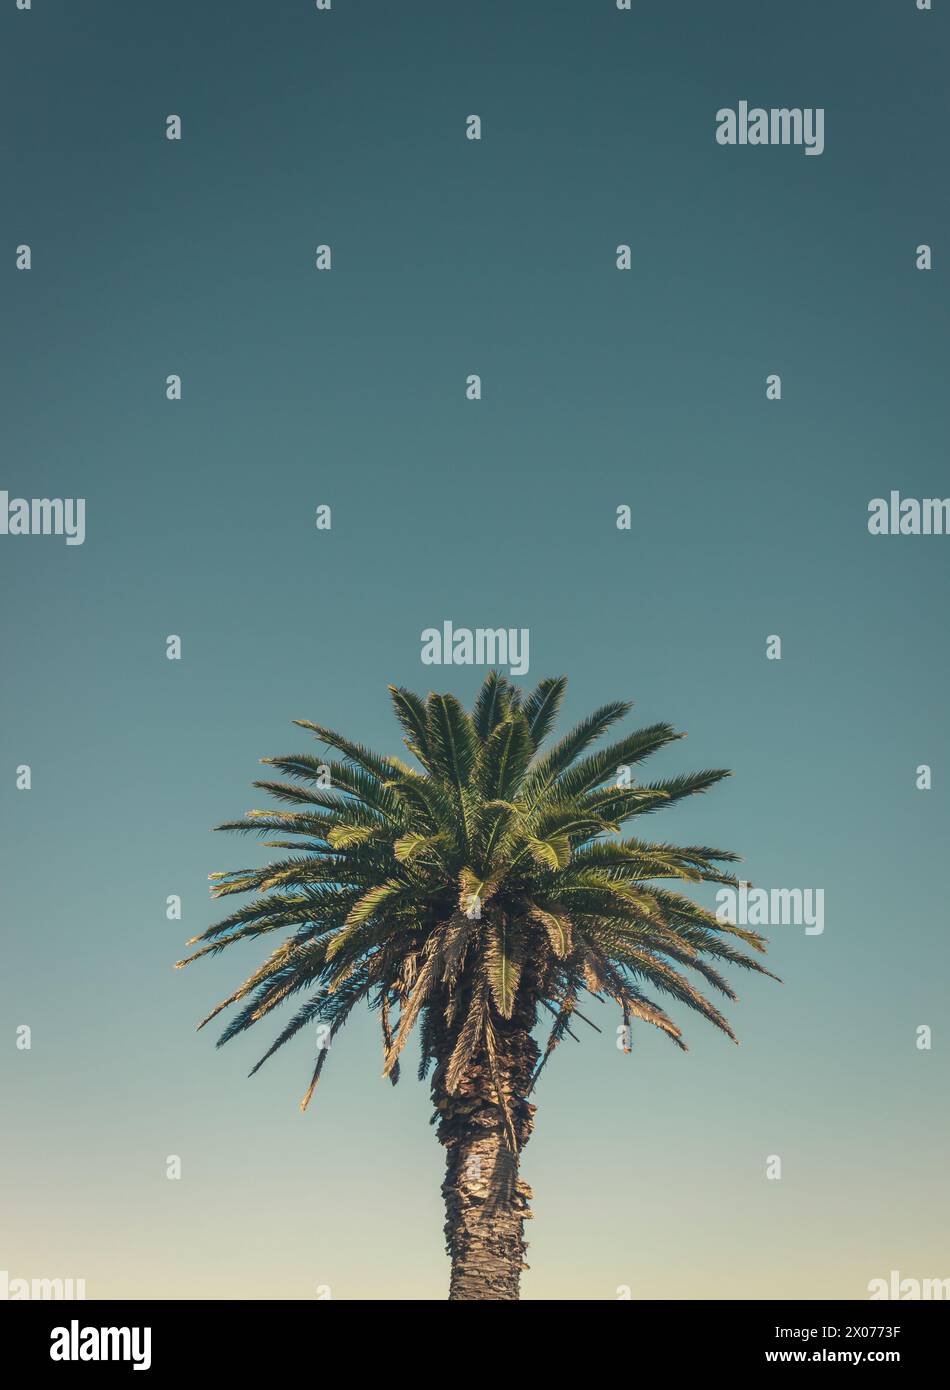 Sydney Sundown Serenity: Solitary Palm Against Colorful Sky in Australian Landscape Stock Photo